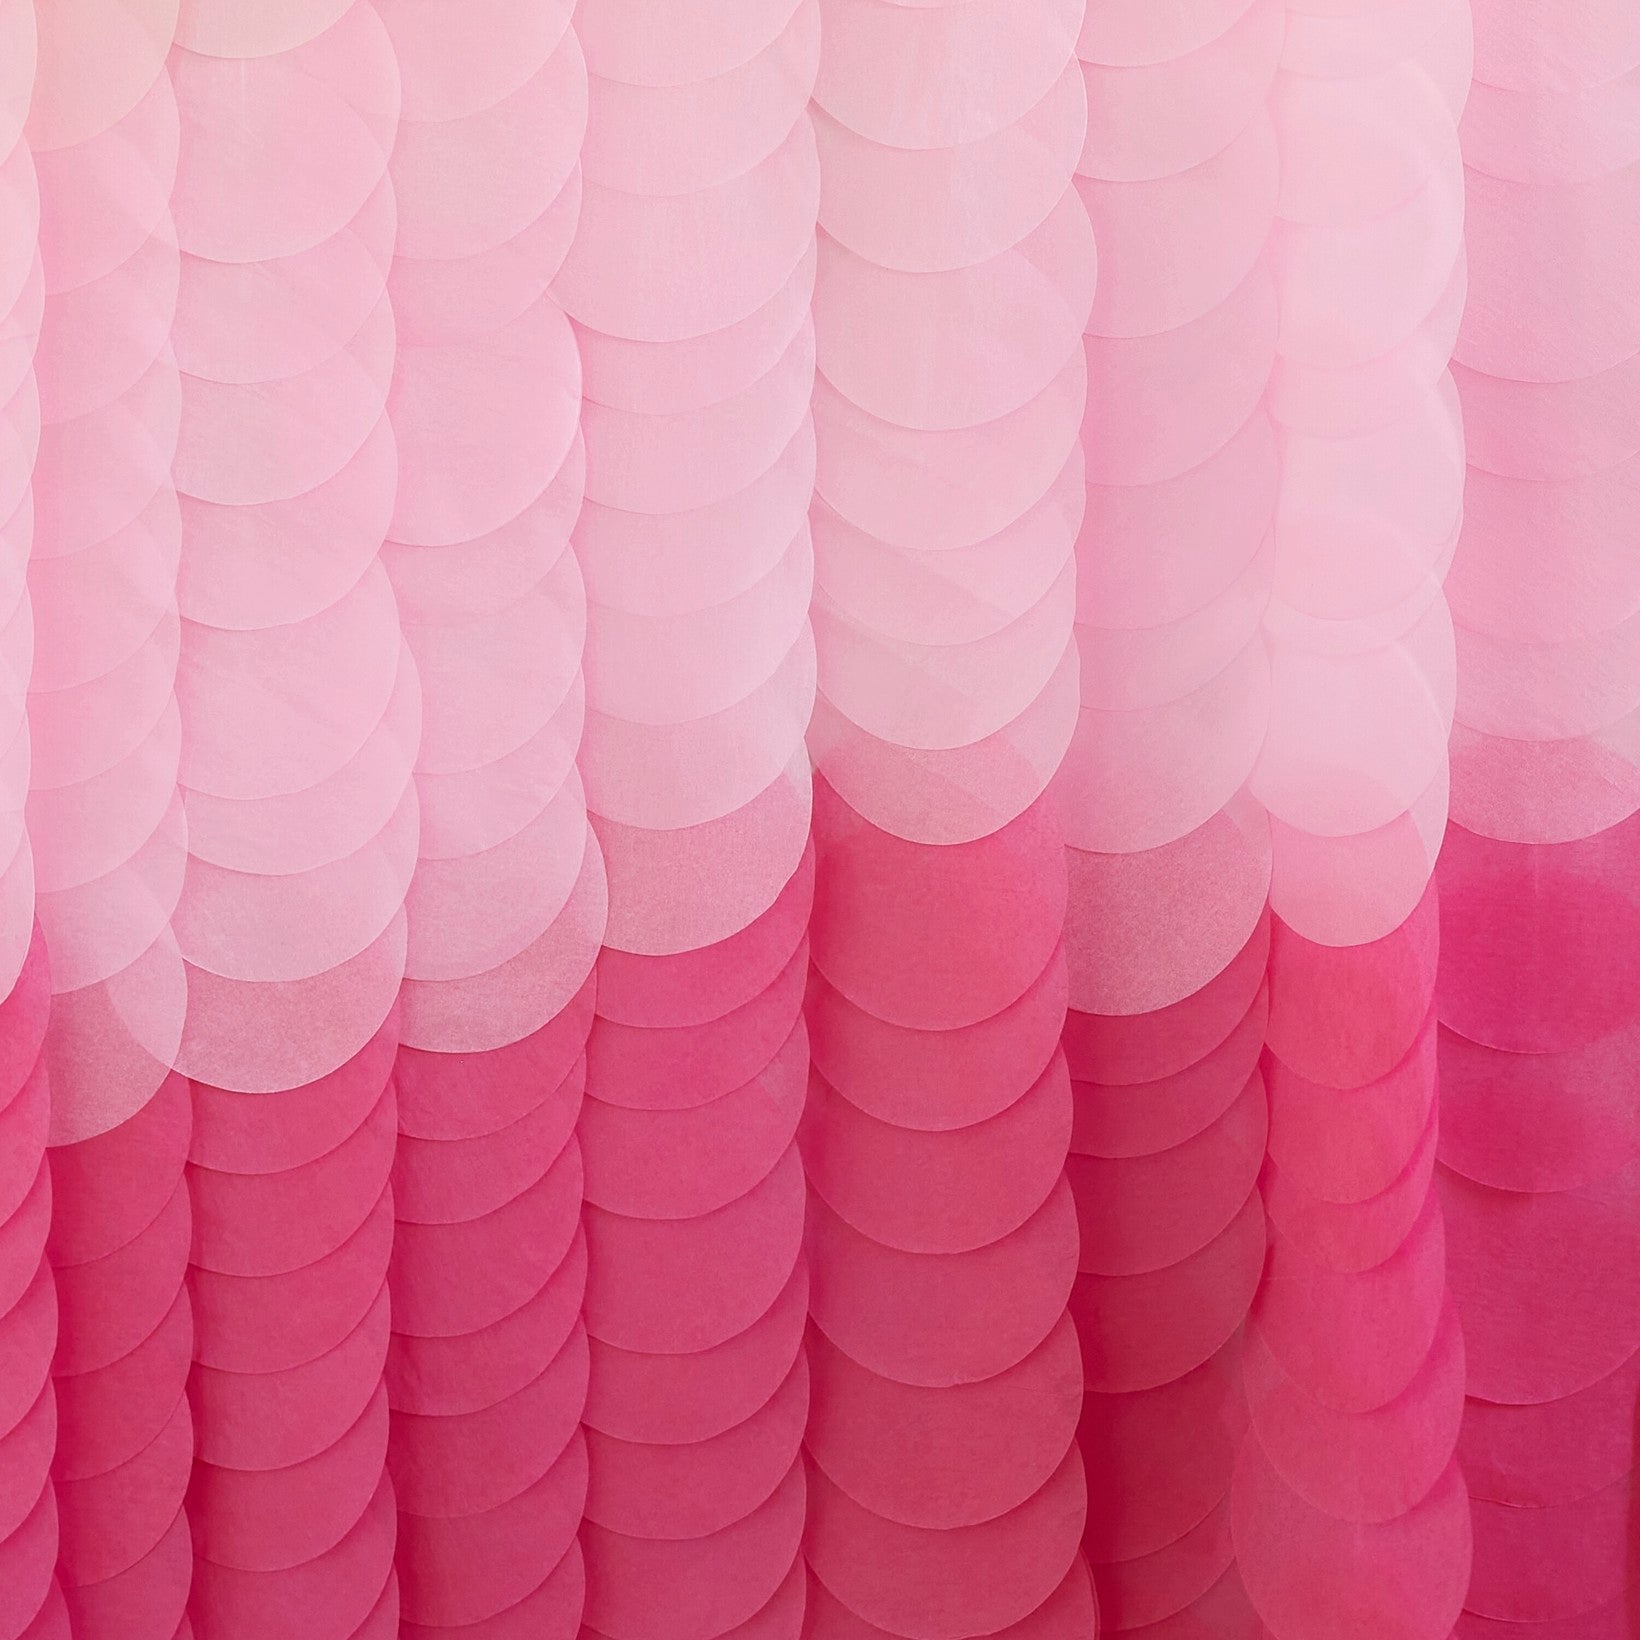 Paper curtain pink 2m (H) x 2m (W)